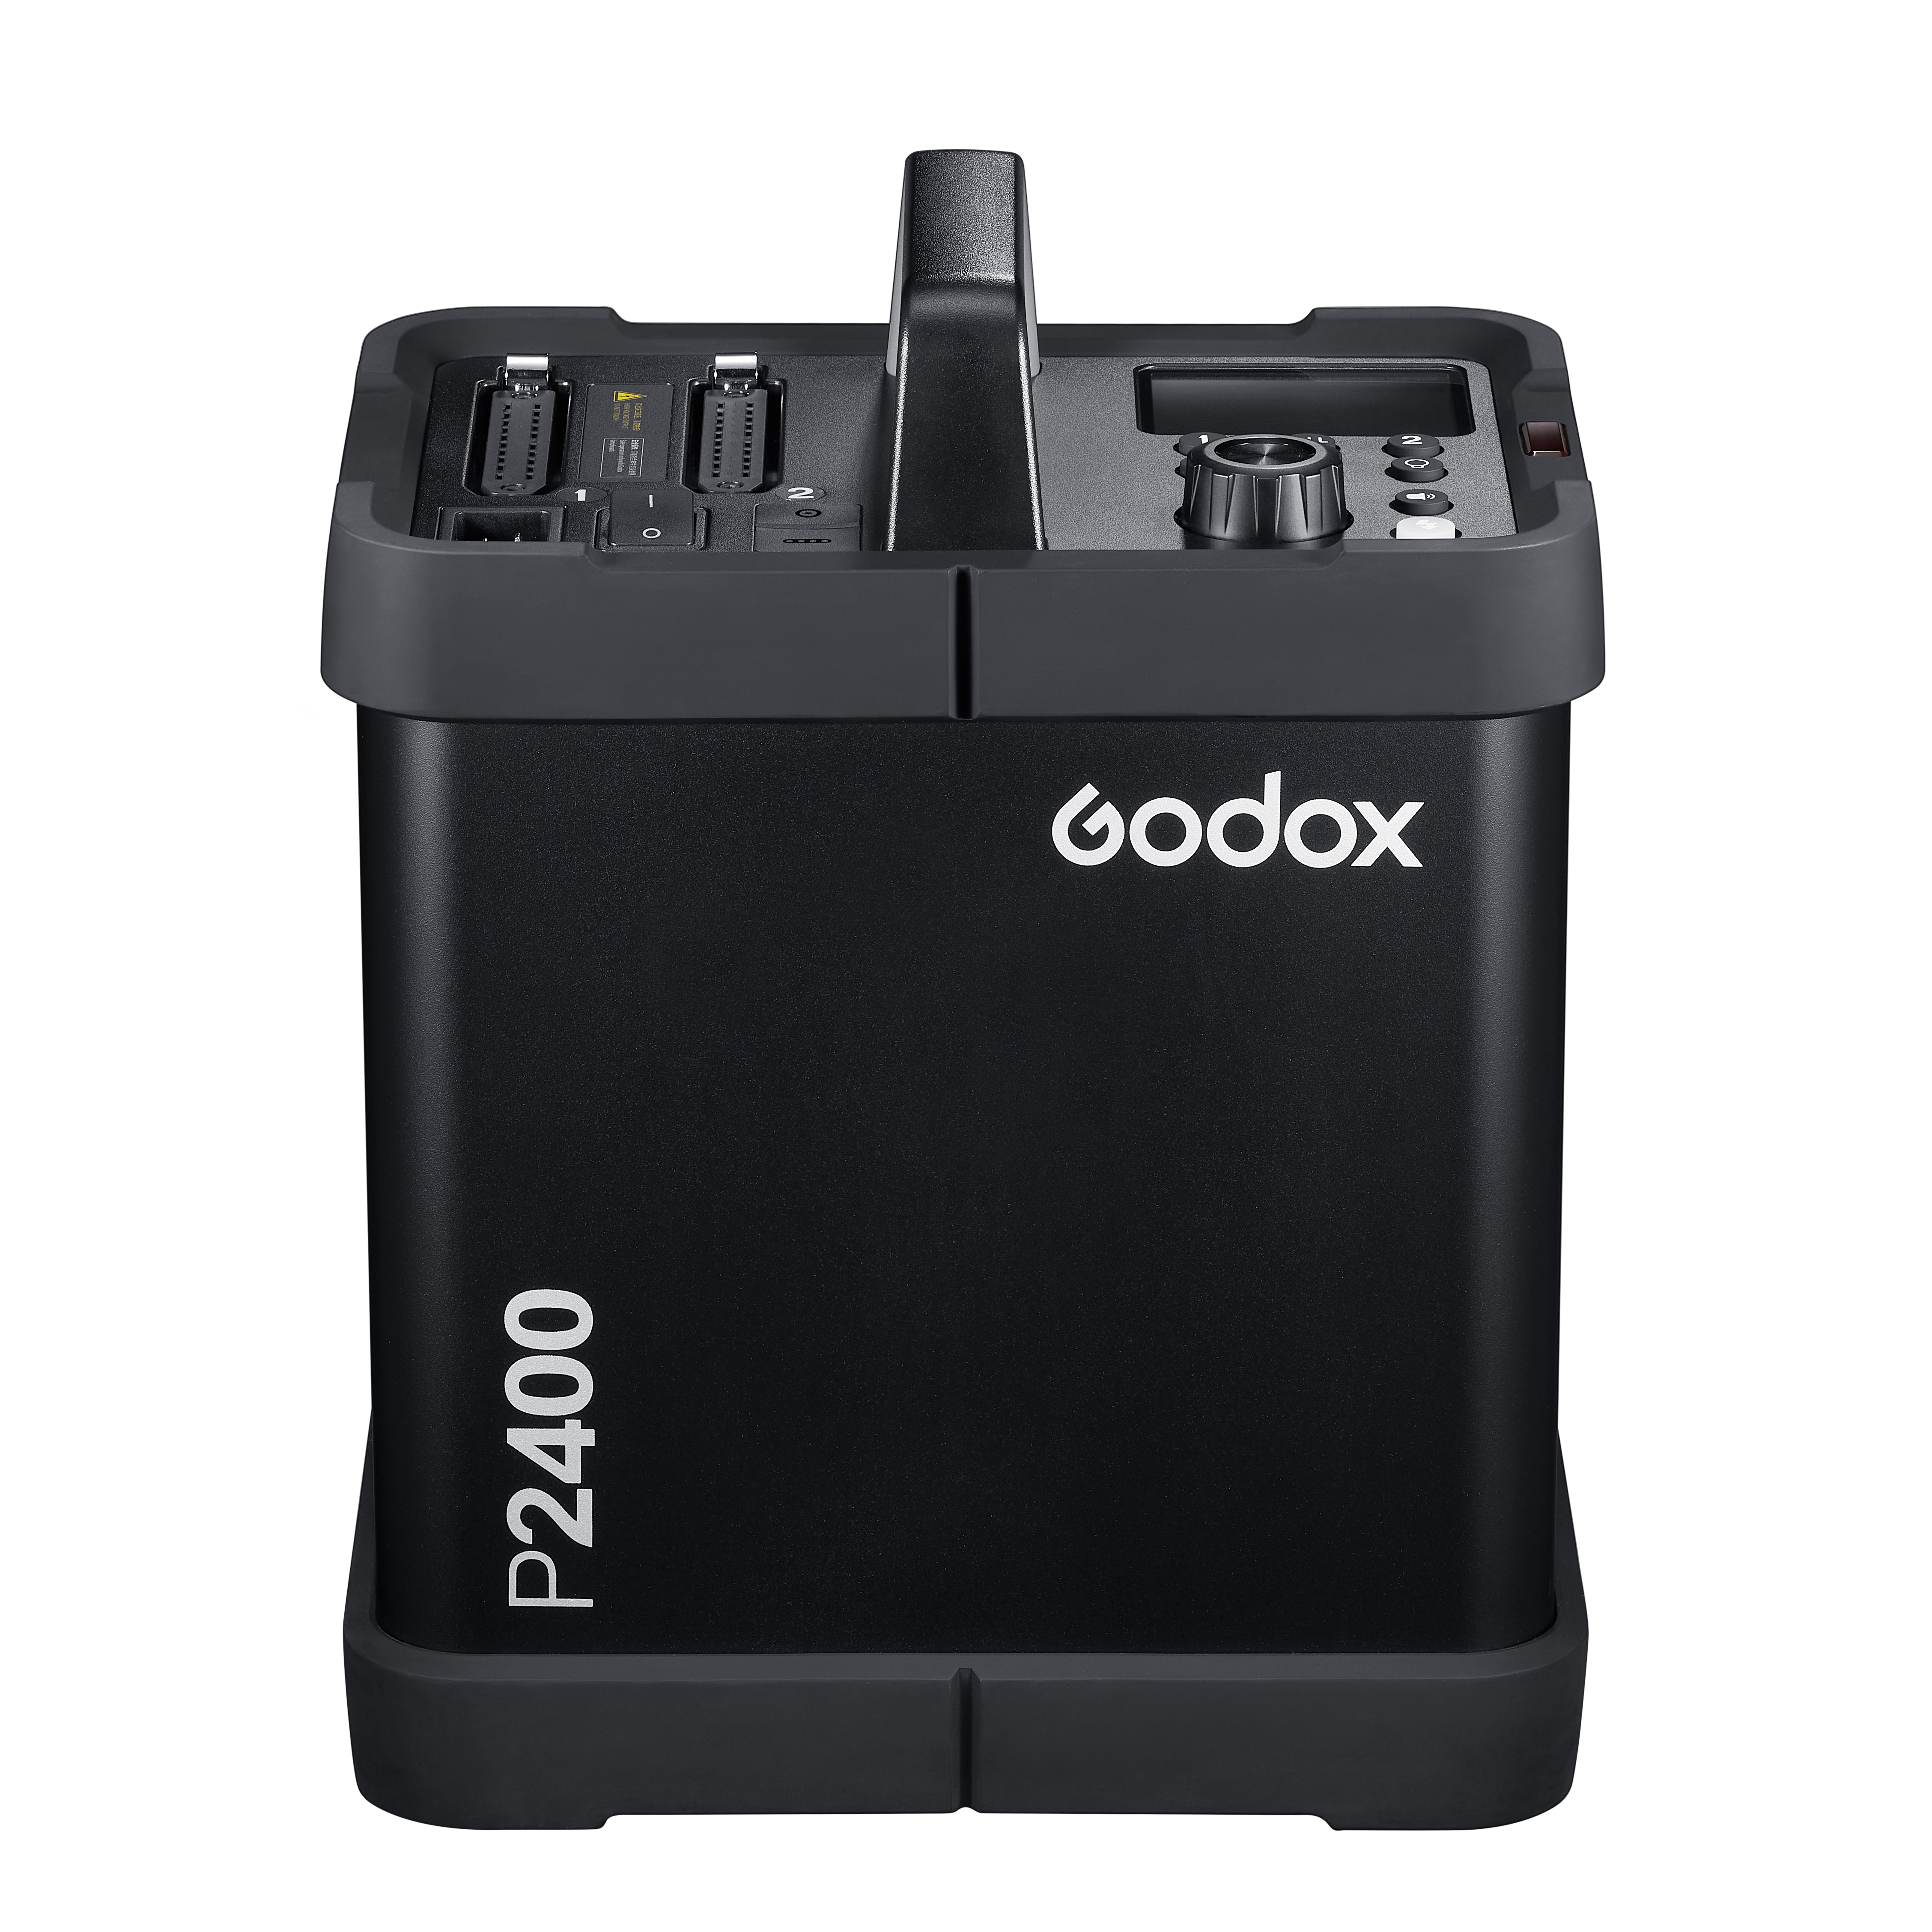 Генератор студийный Godox p2400. Godox p2400. Godox p2400 Power Pack Kit. P2400.